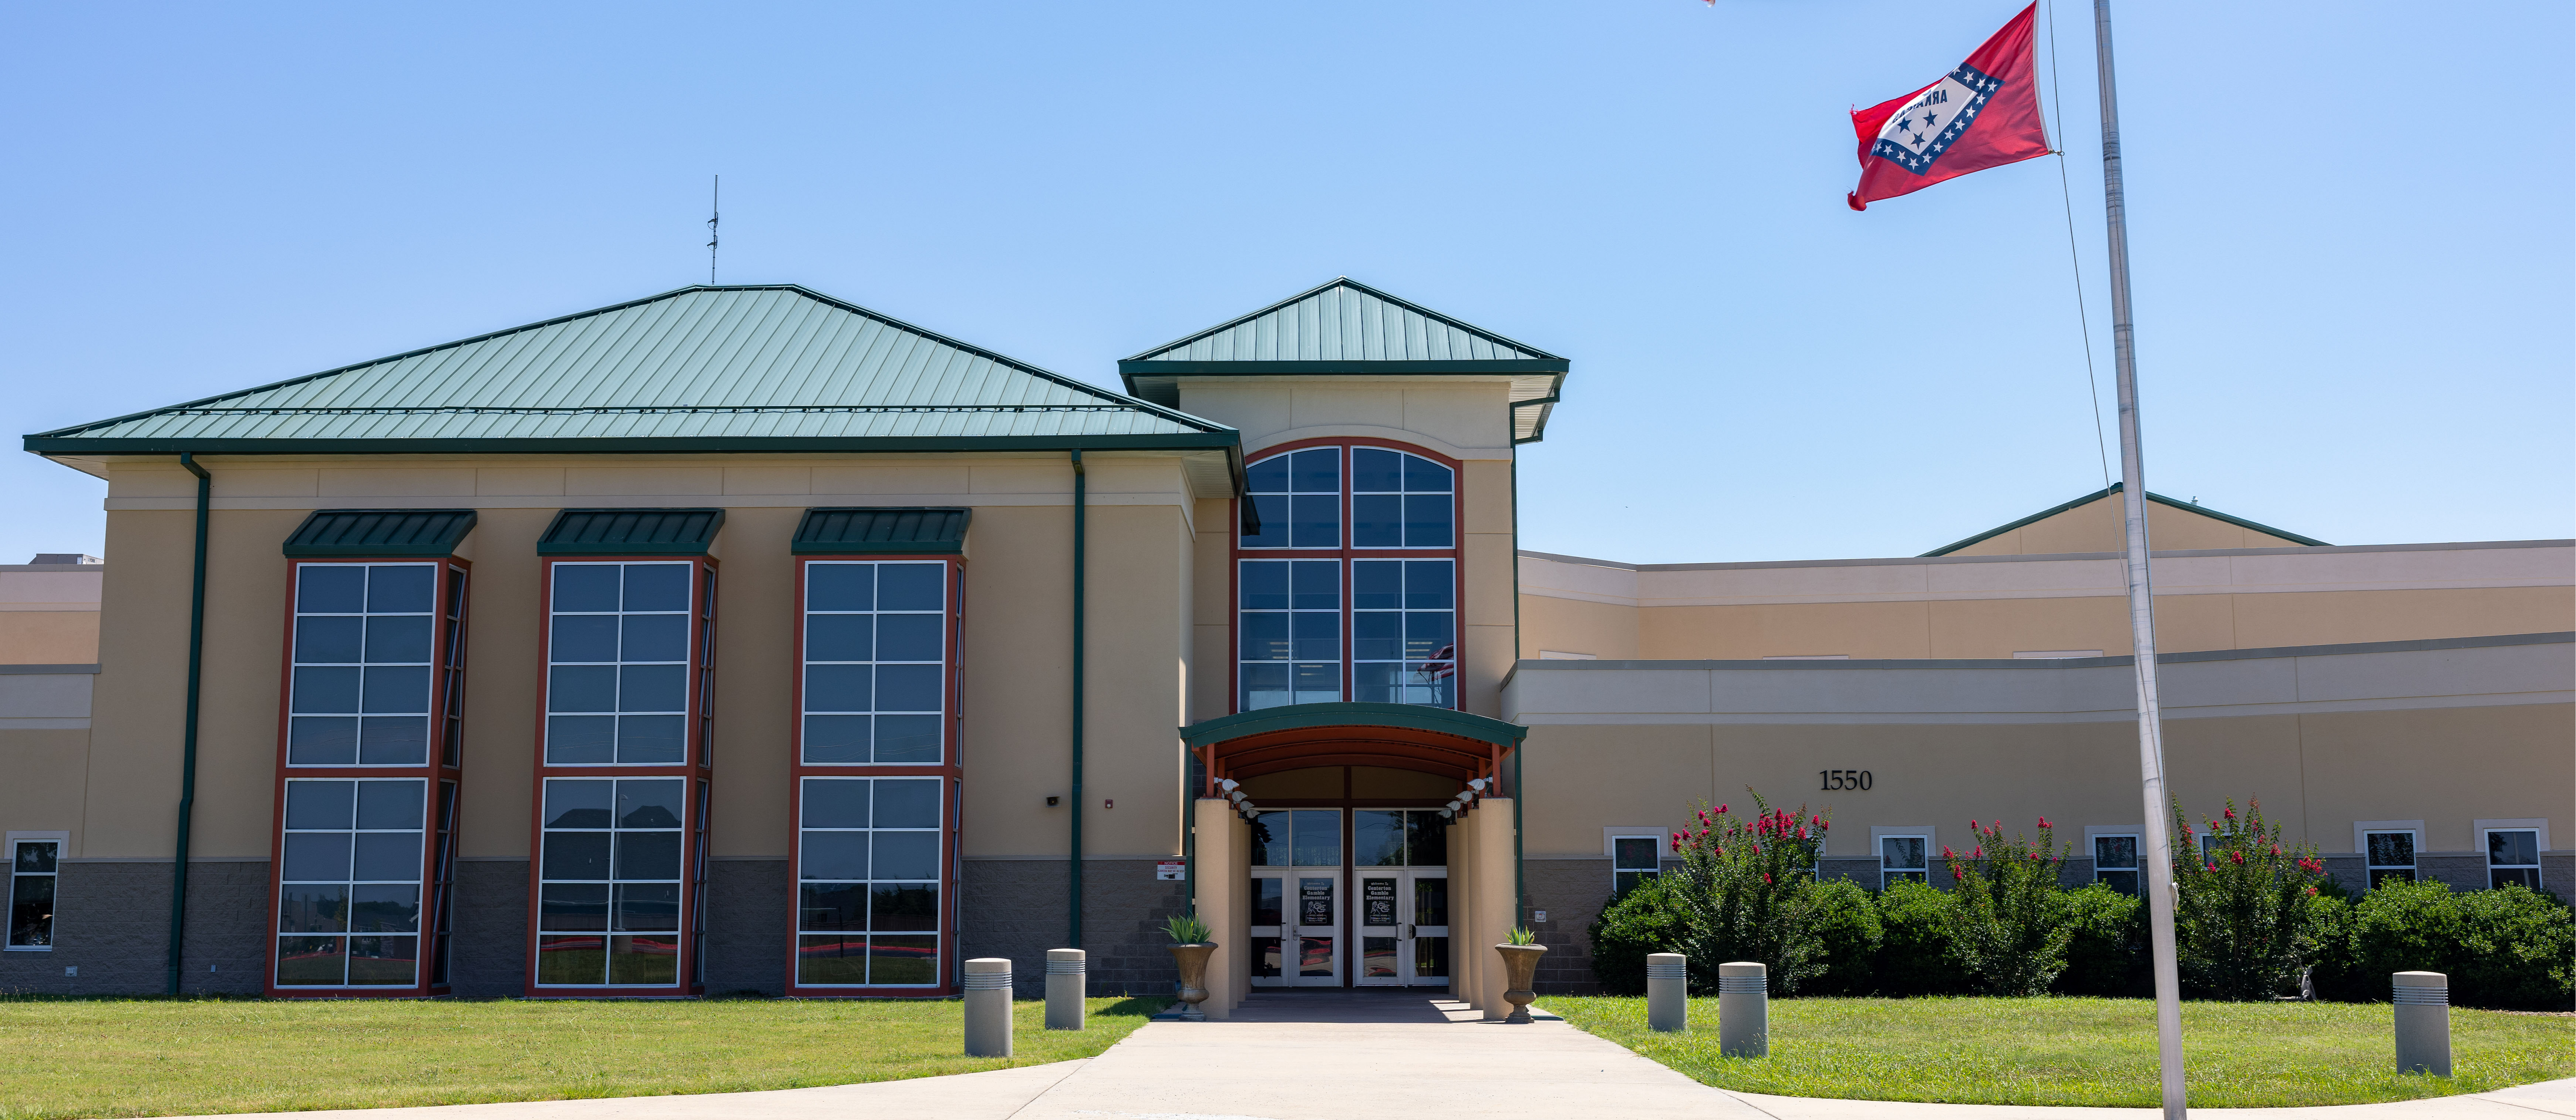 Centerton Gamble Elementary School panorama